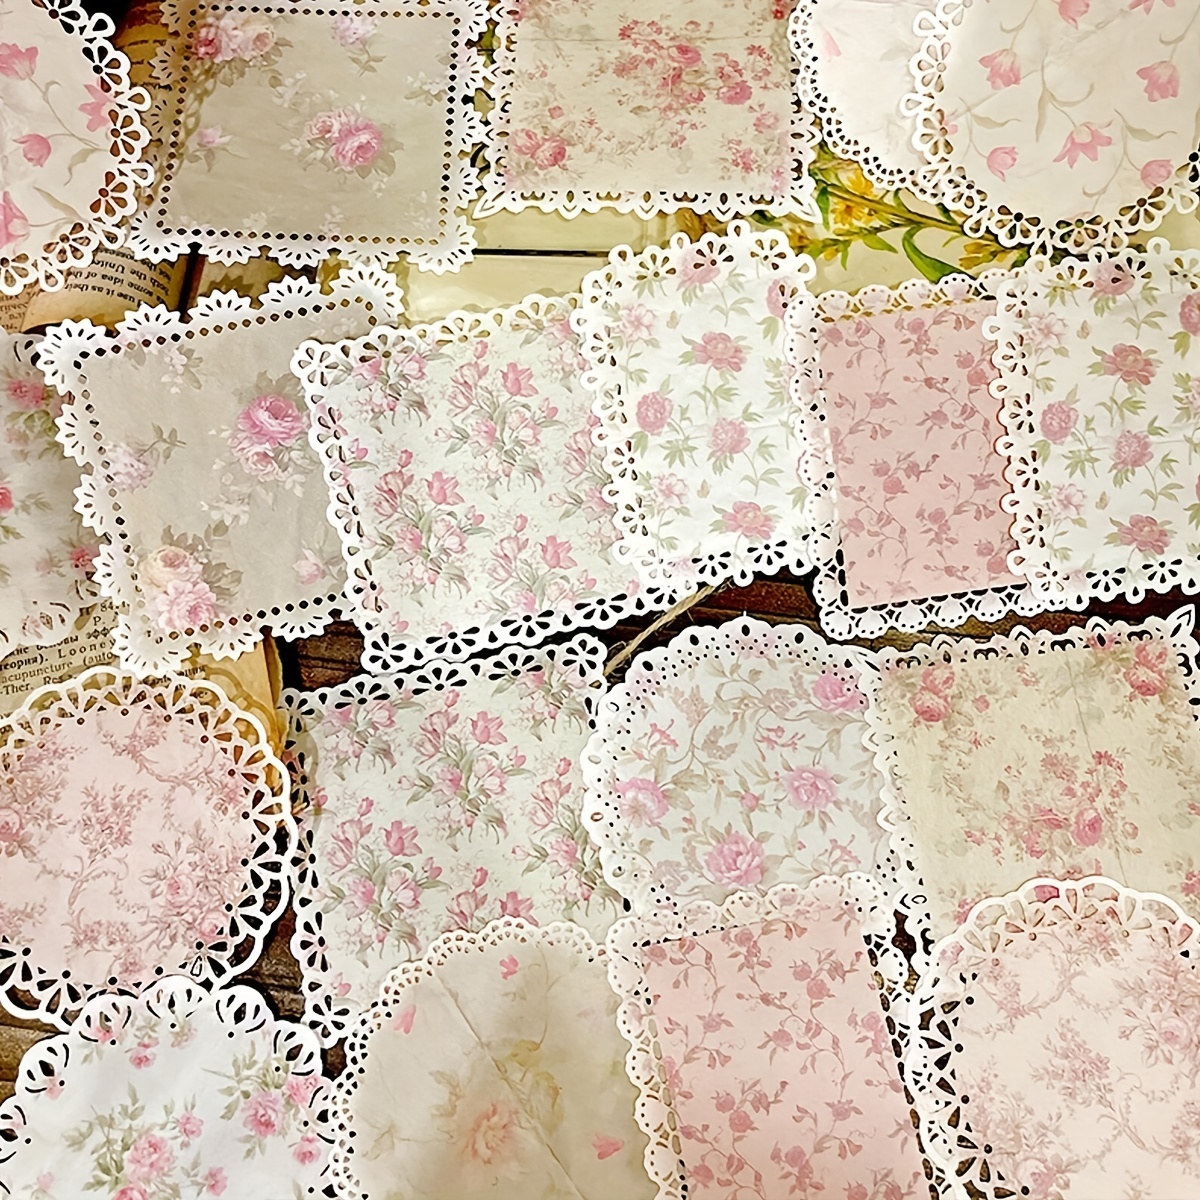 

20pcs/pack Retro Flower Lace Hollowed Frame Decor Flower Material Paper Scrapbooking Diy Journal Craft Vintage Stationery